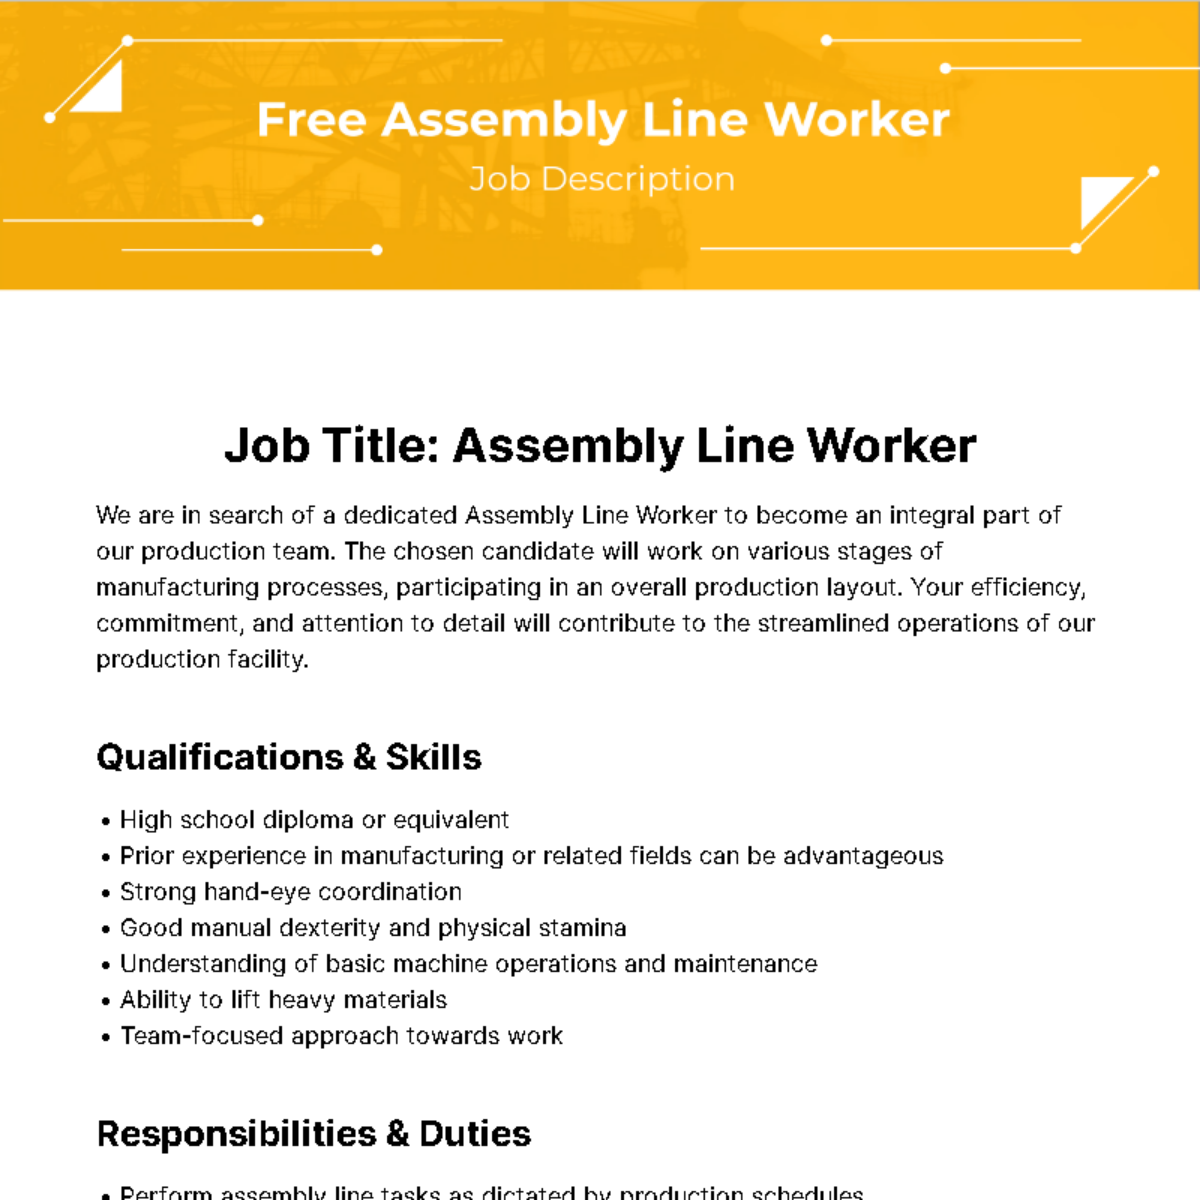 Free Assembly Line Worker Job Description Template